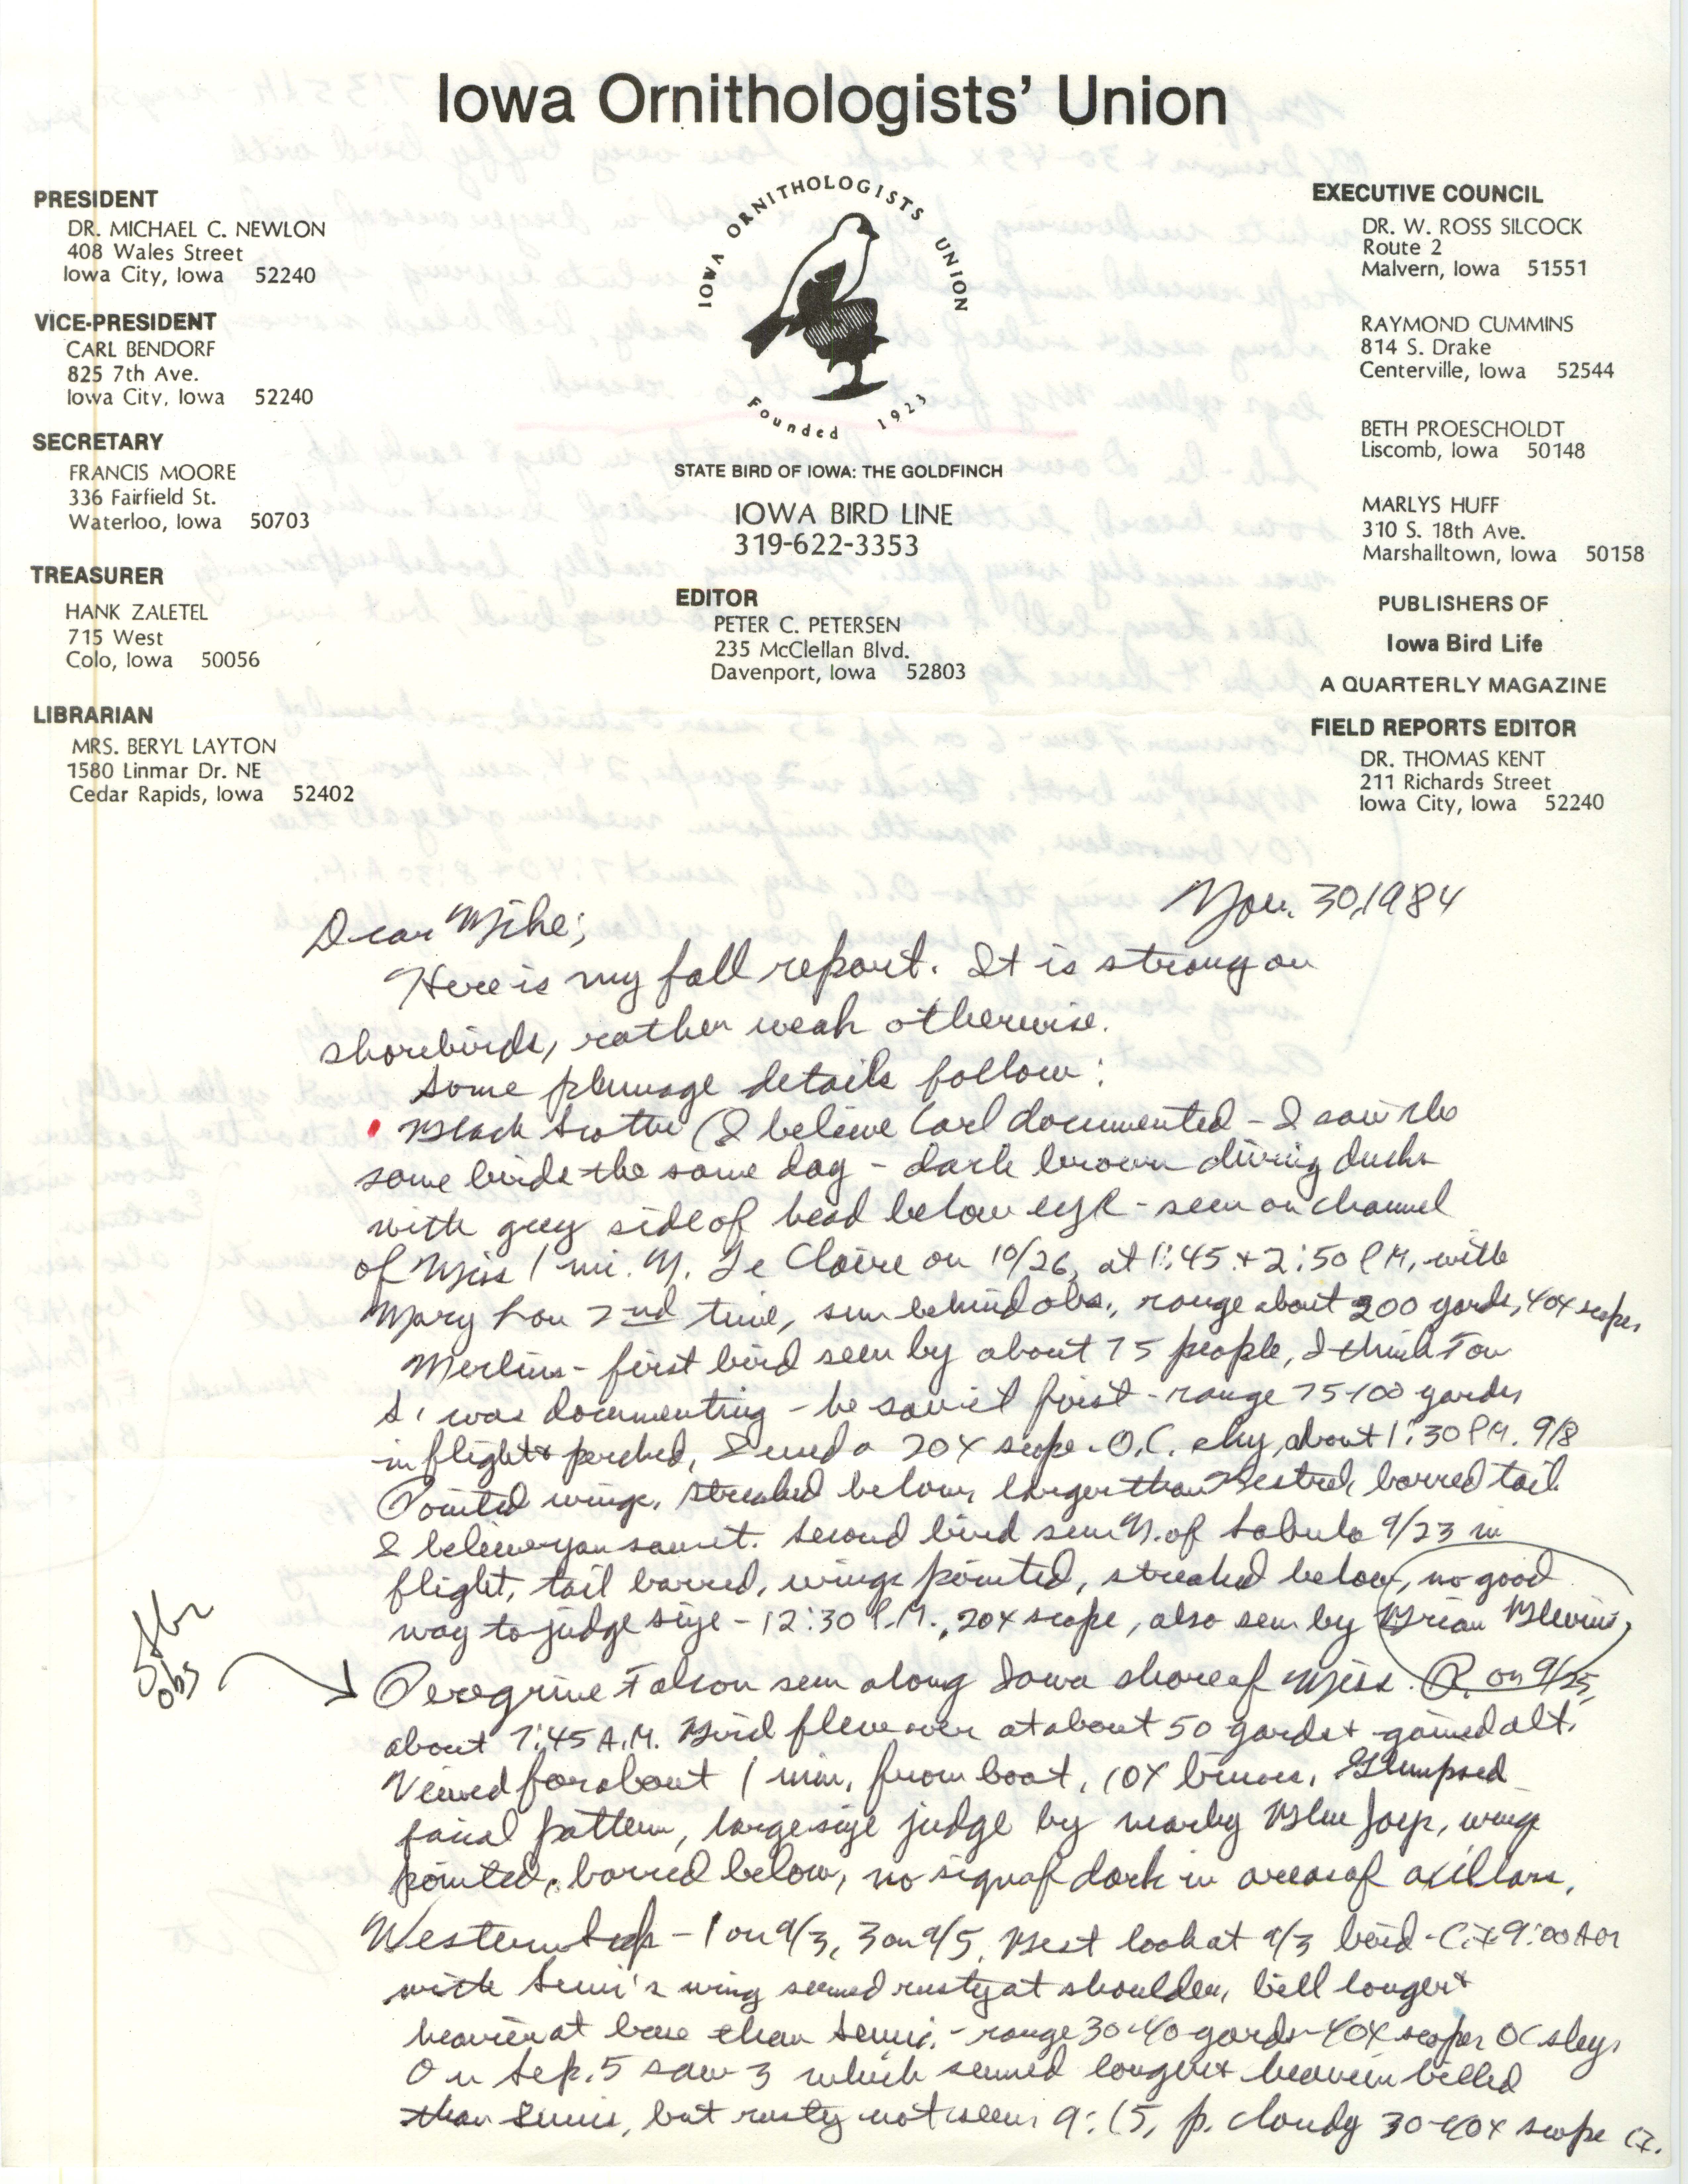 Peter C. Petersen letter to Michael C. Newlon regarding fall birds sighted, November 30, 1984